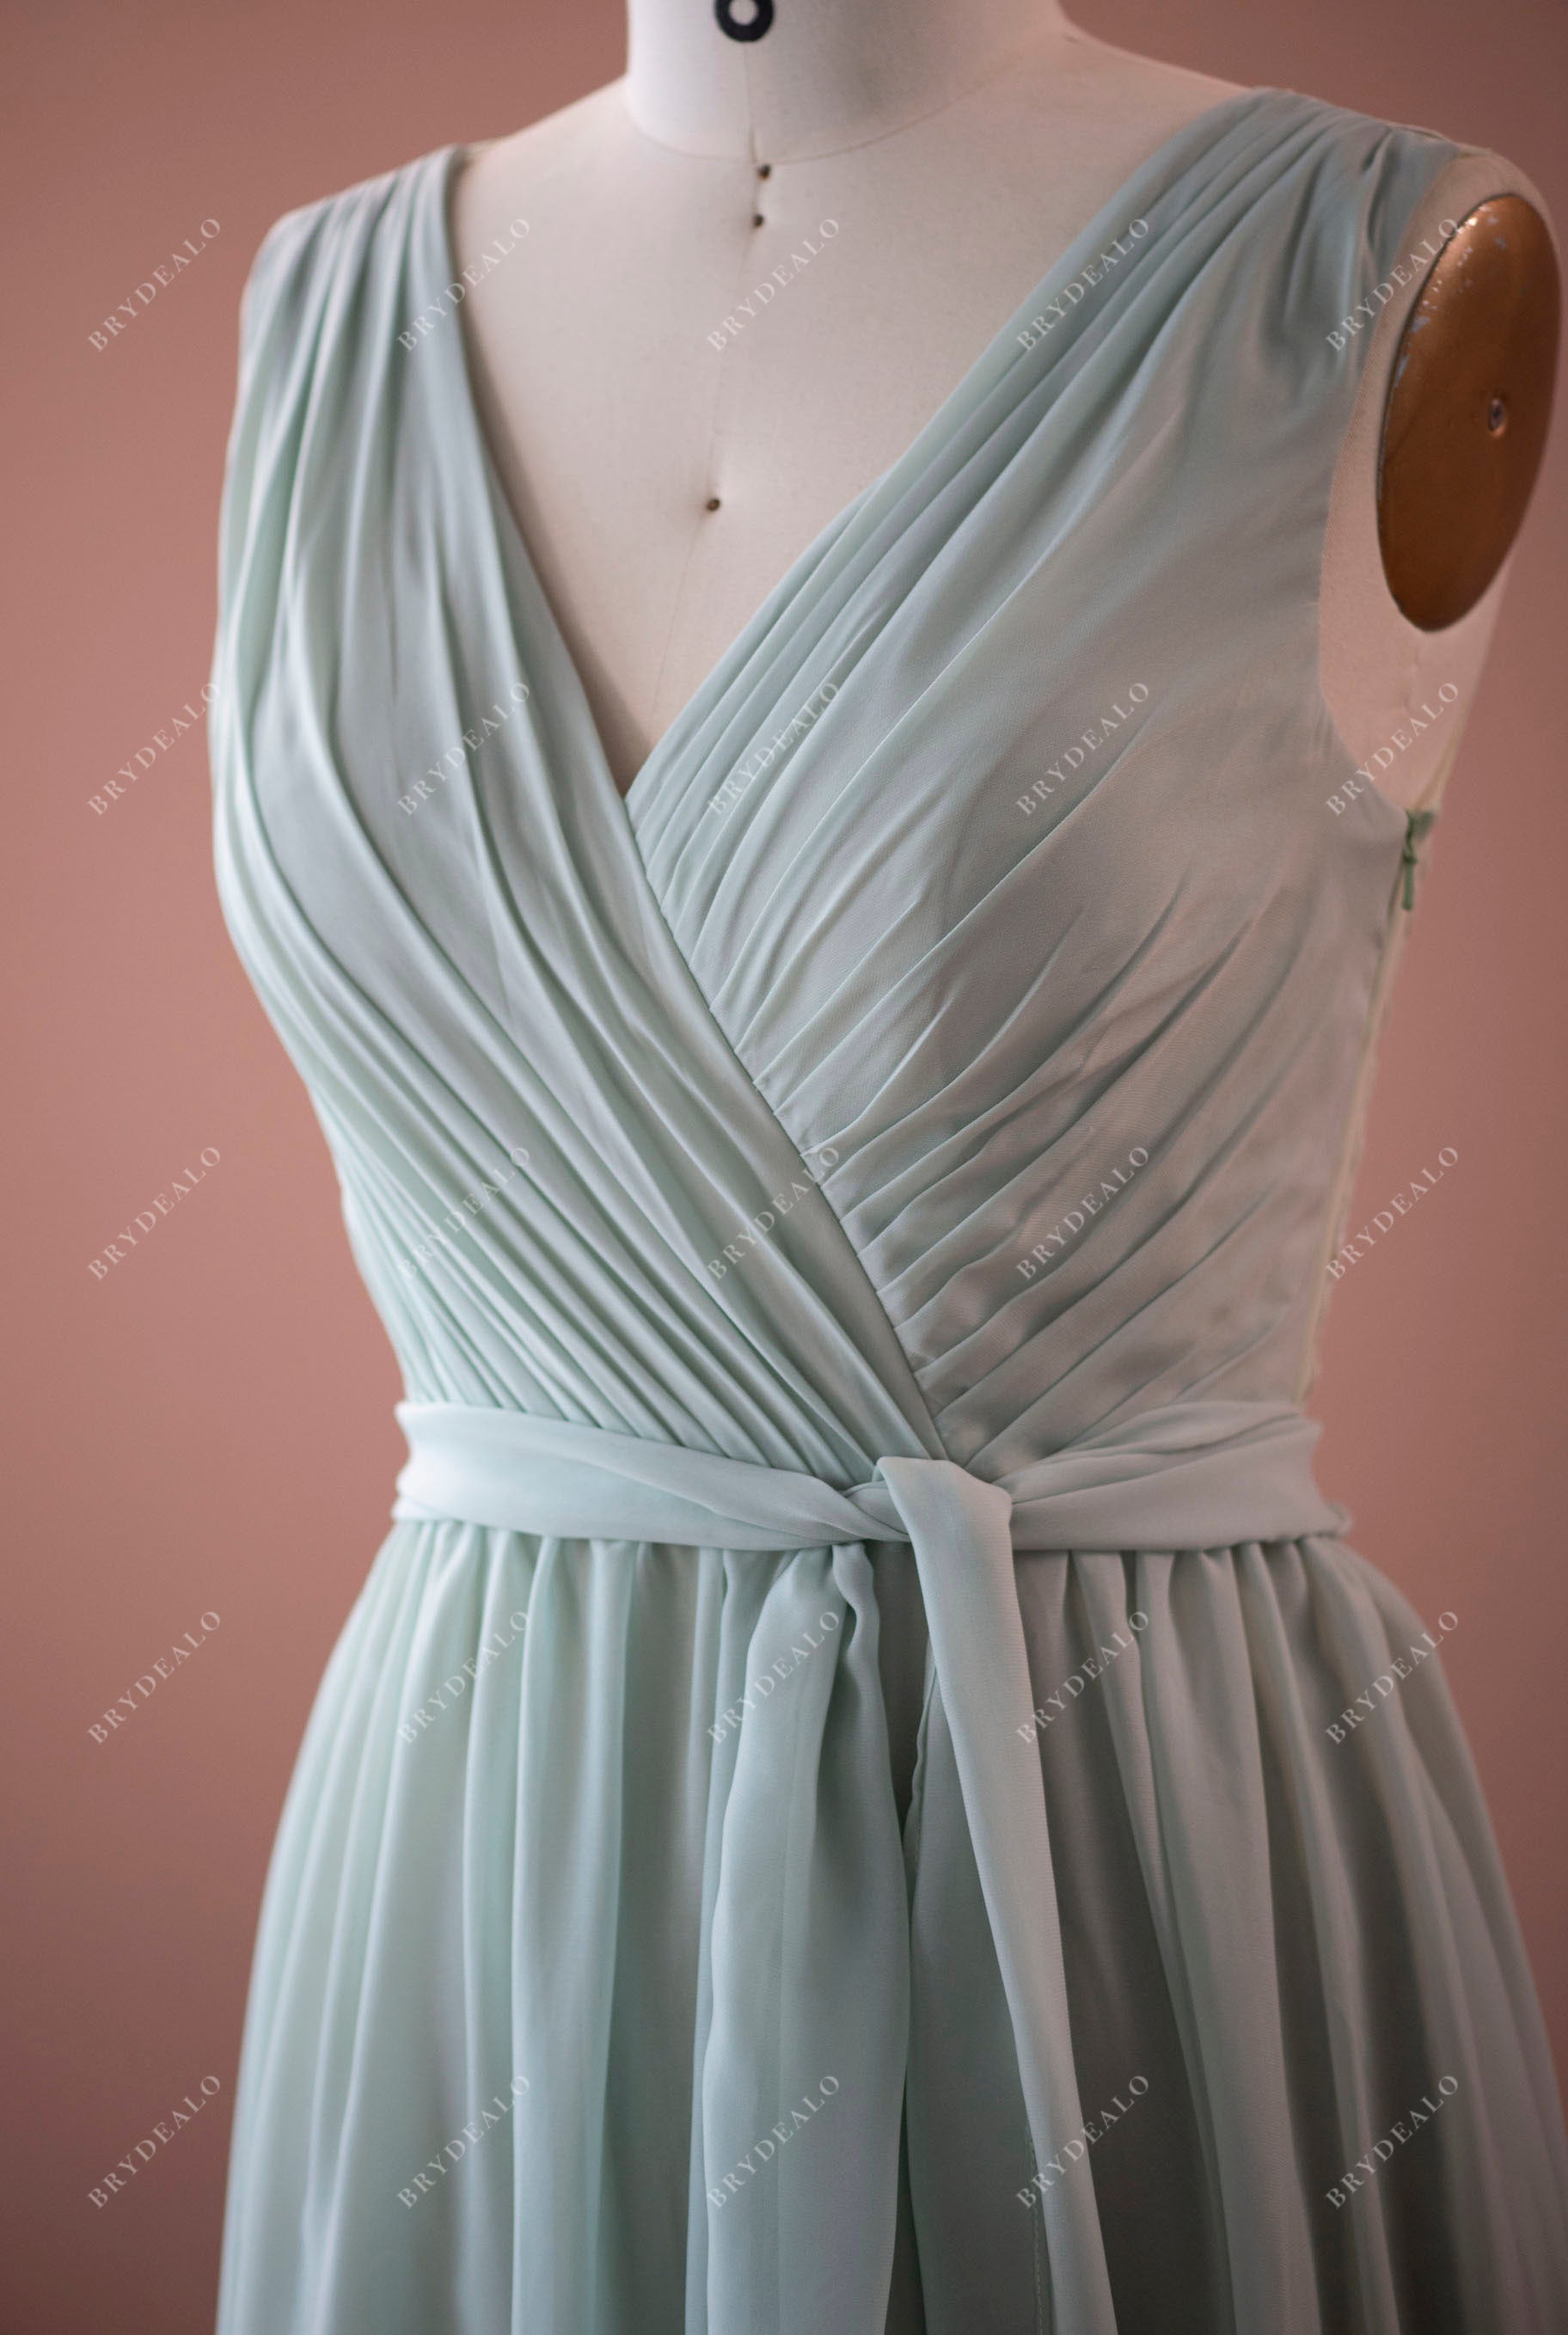 Sage Lace Chiffon Ruched Bridesmaid Dress